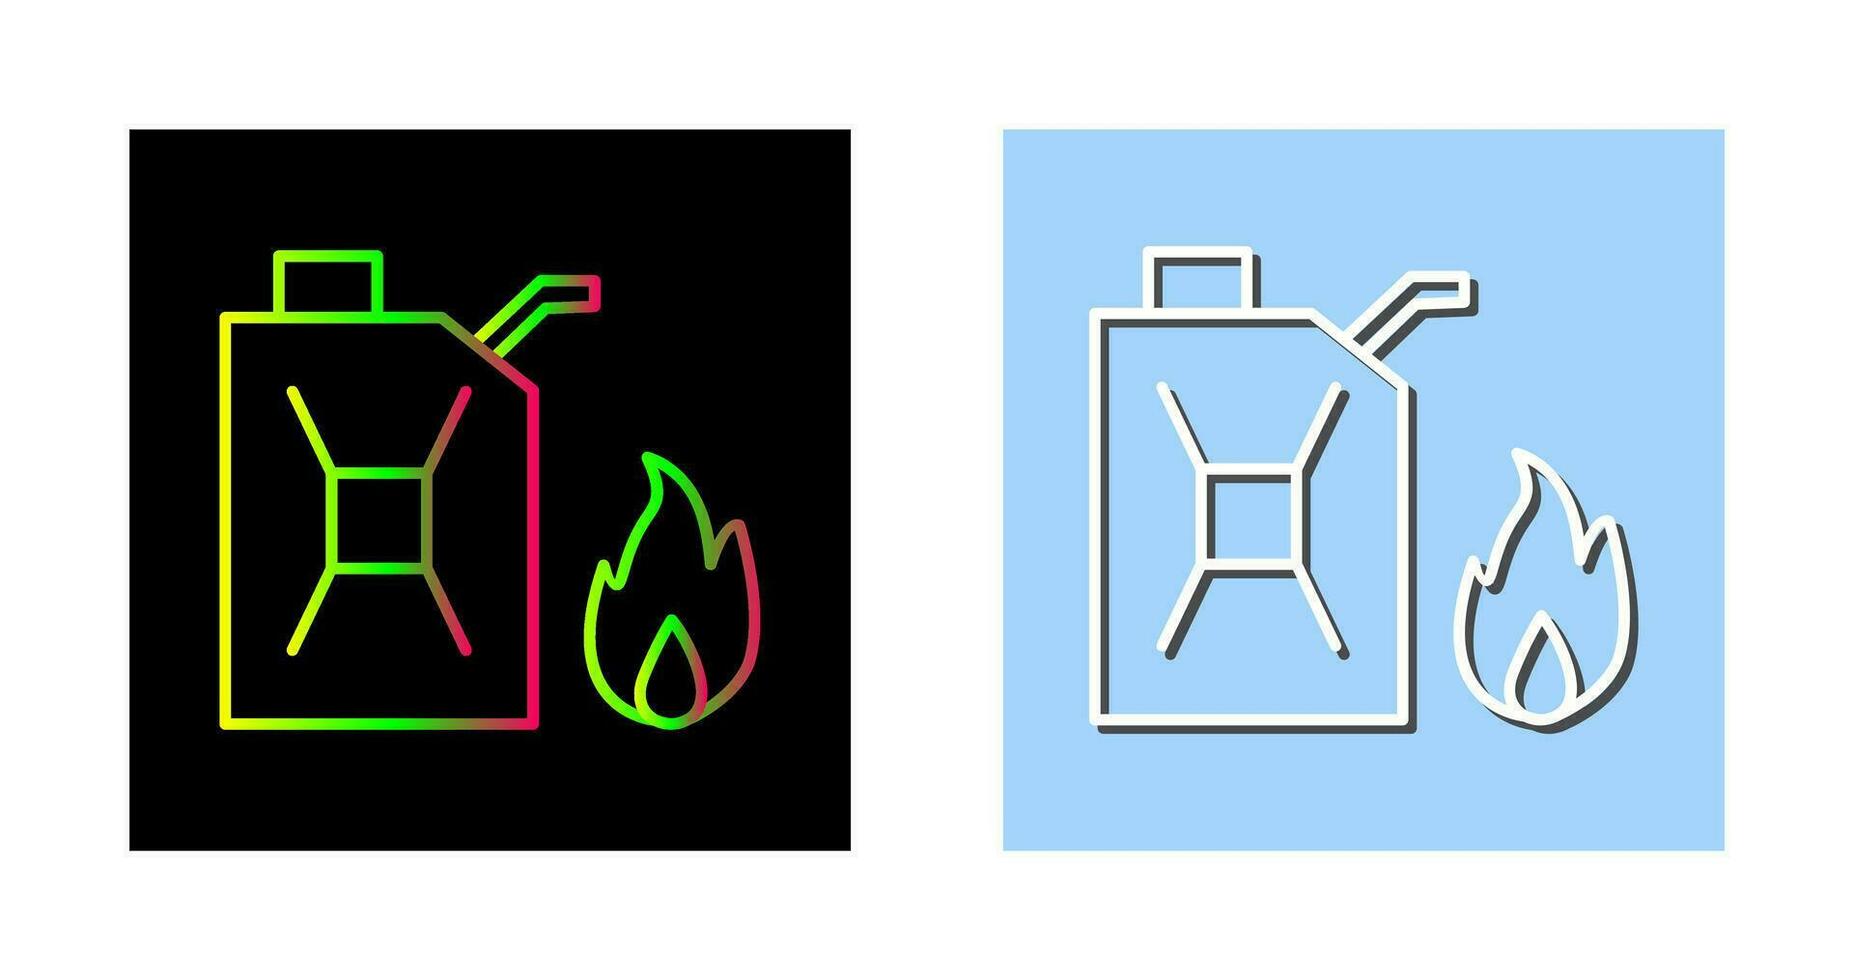 unik bränsle till brand vektor ikon